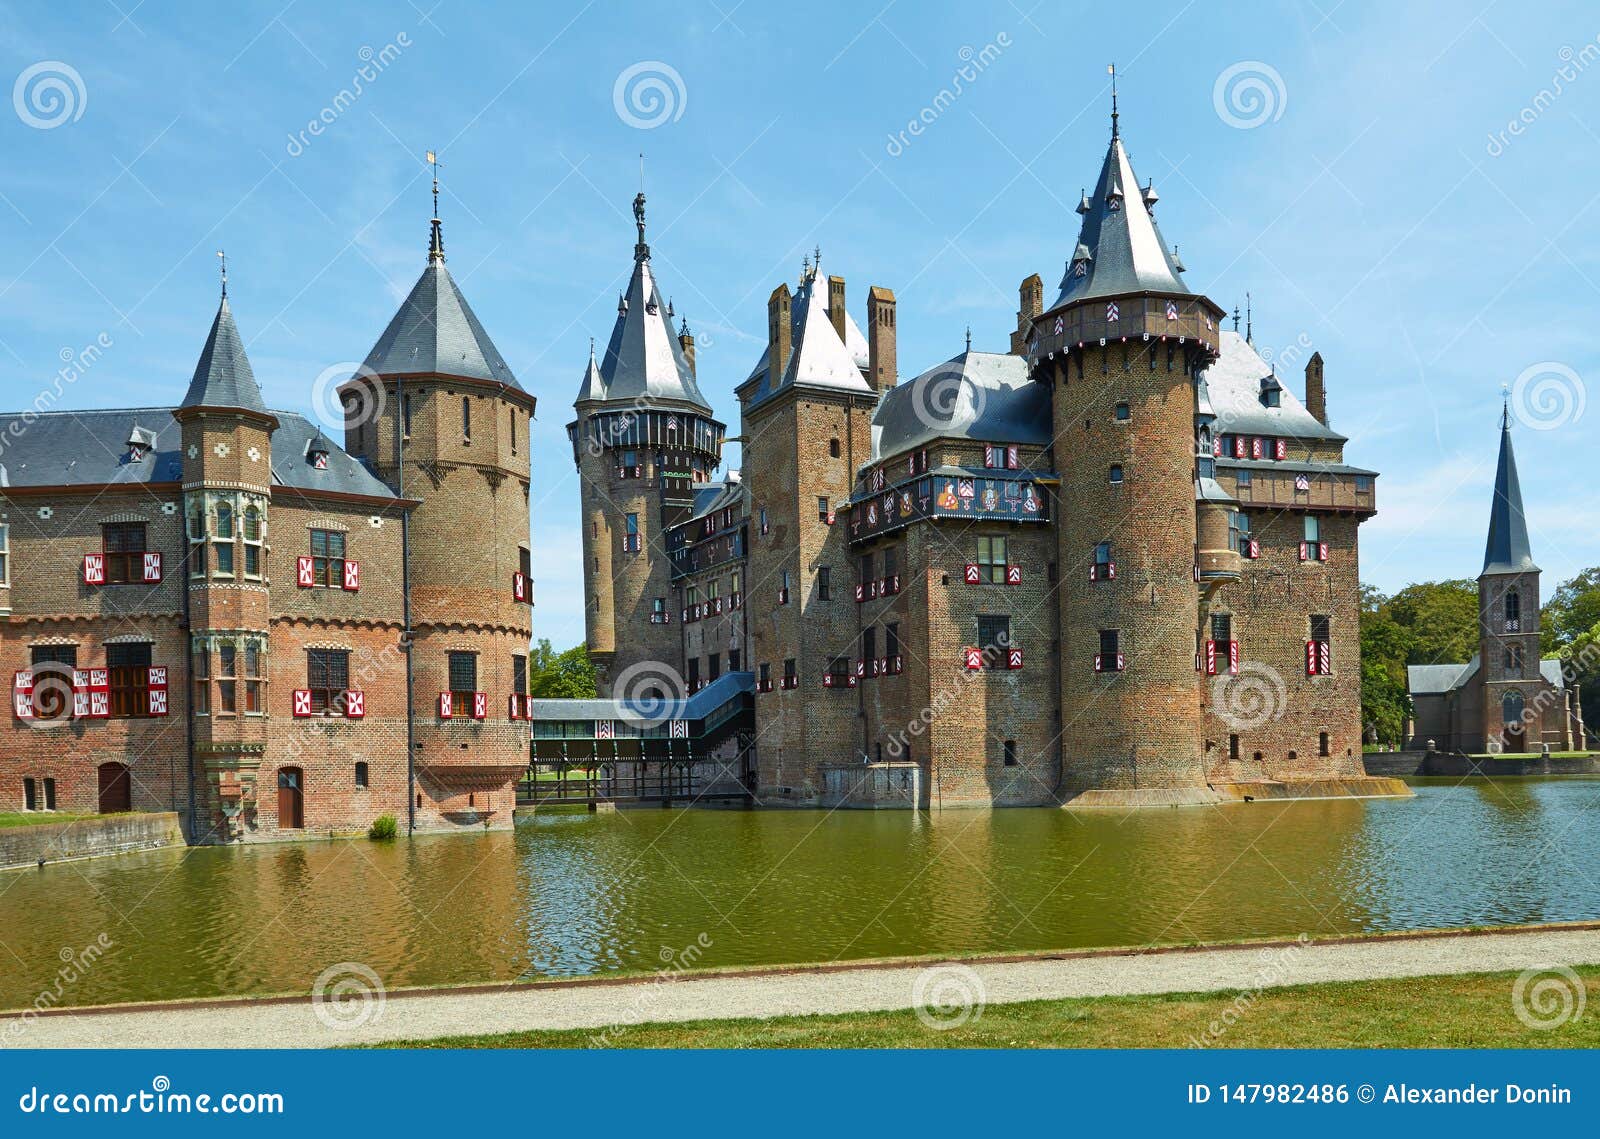 Castle De Haar is Located, in the Province of Utrecht Photo Image nature, medieval: 147982486